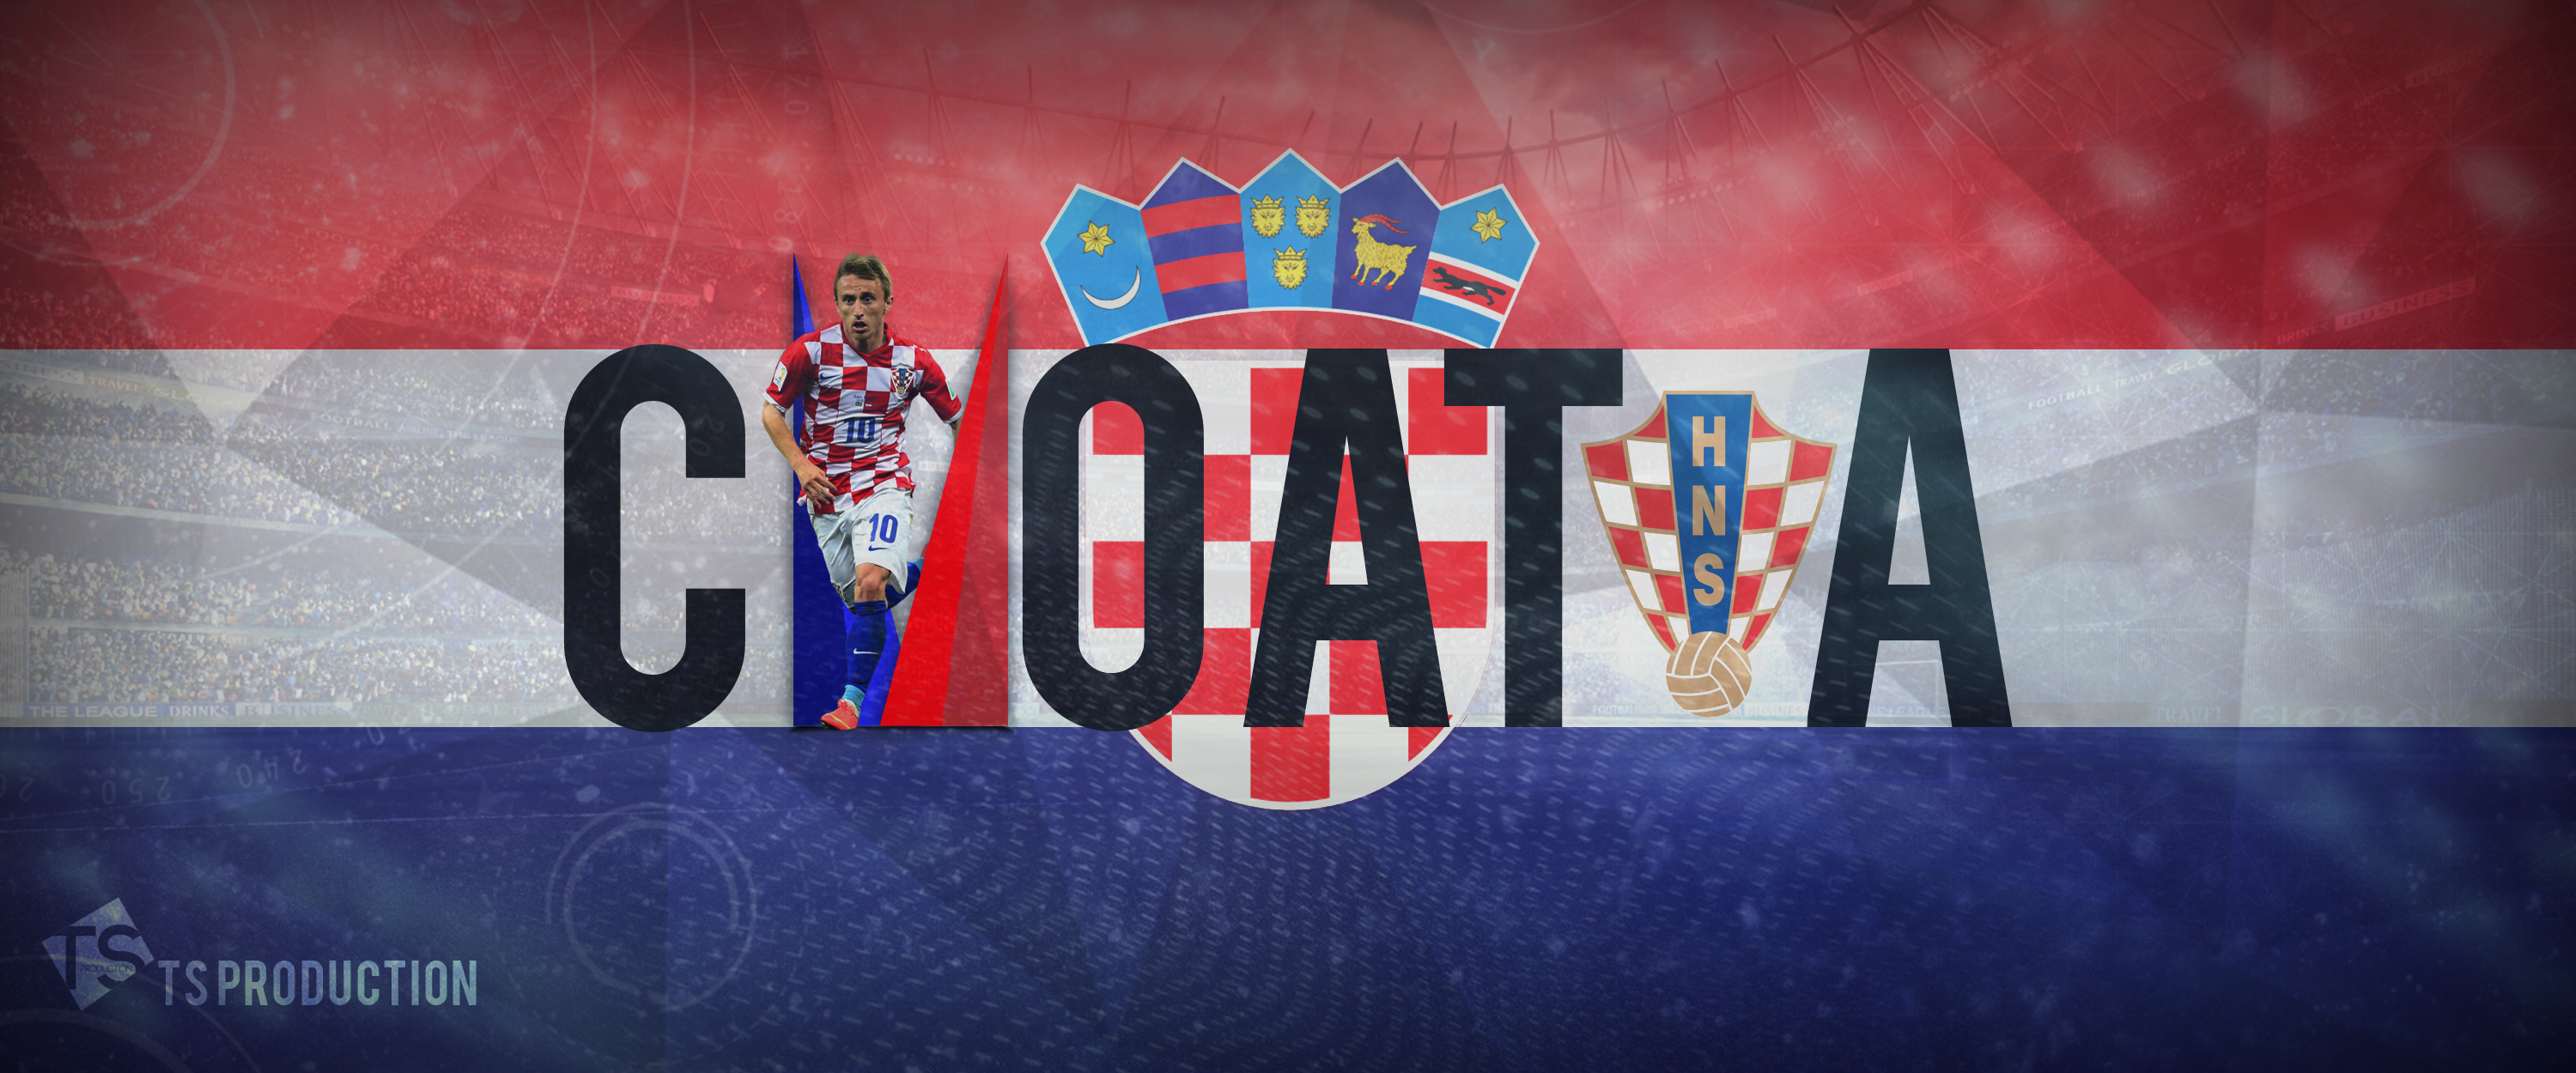 Croatia National Football Team Wallpaper On